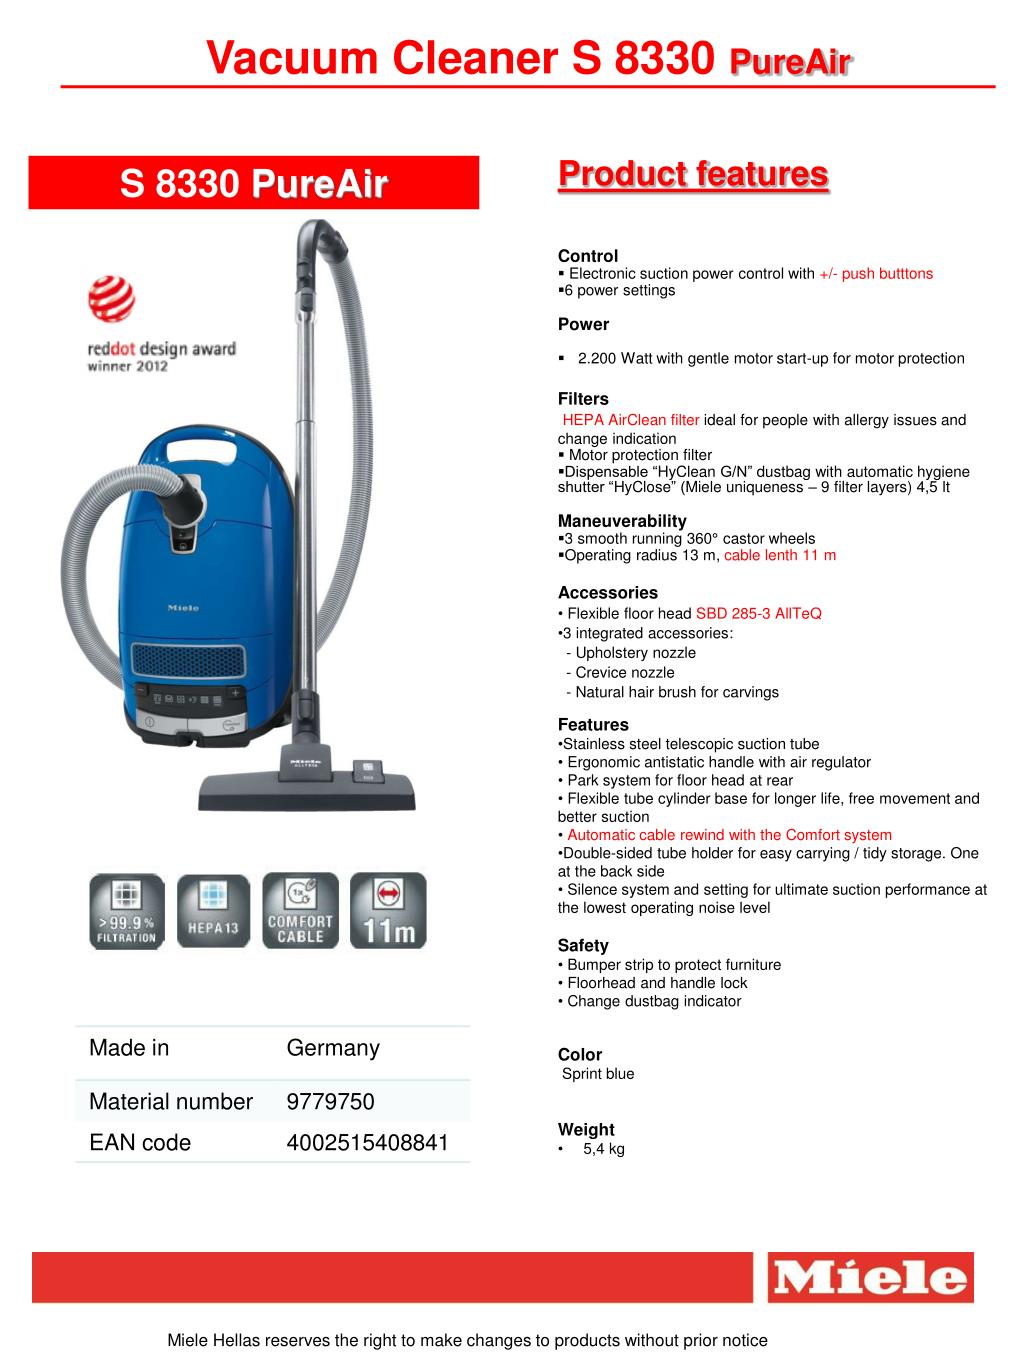 PPT - Vacuum Cleaner S 8330 PureAir PowerPoint Presentation, free download  - ID:5707740